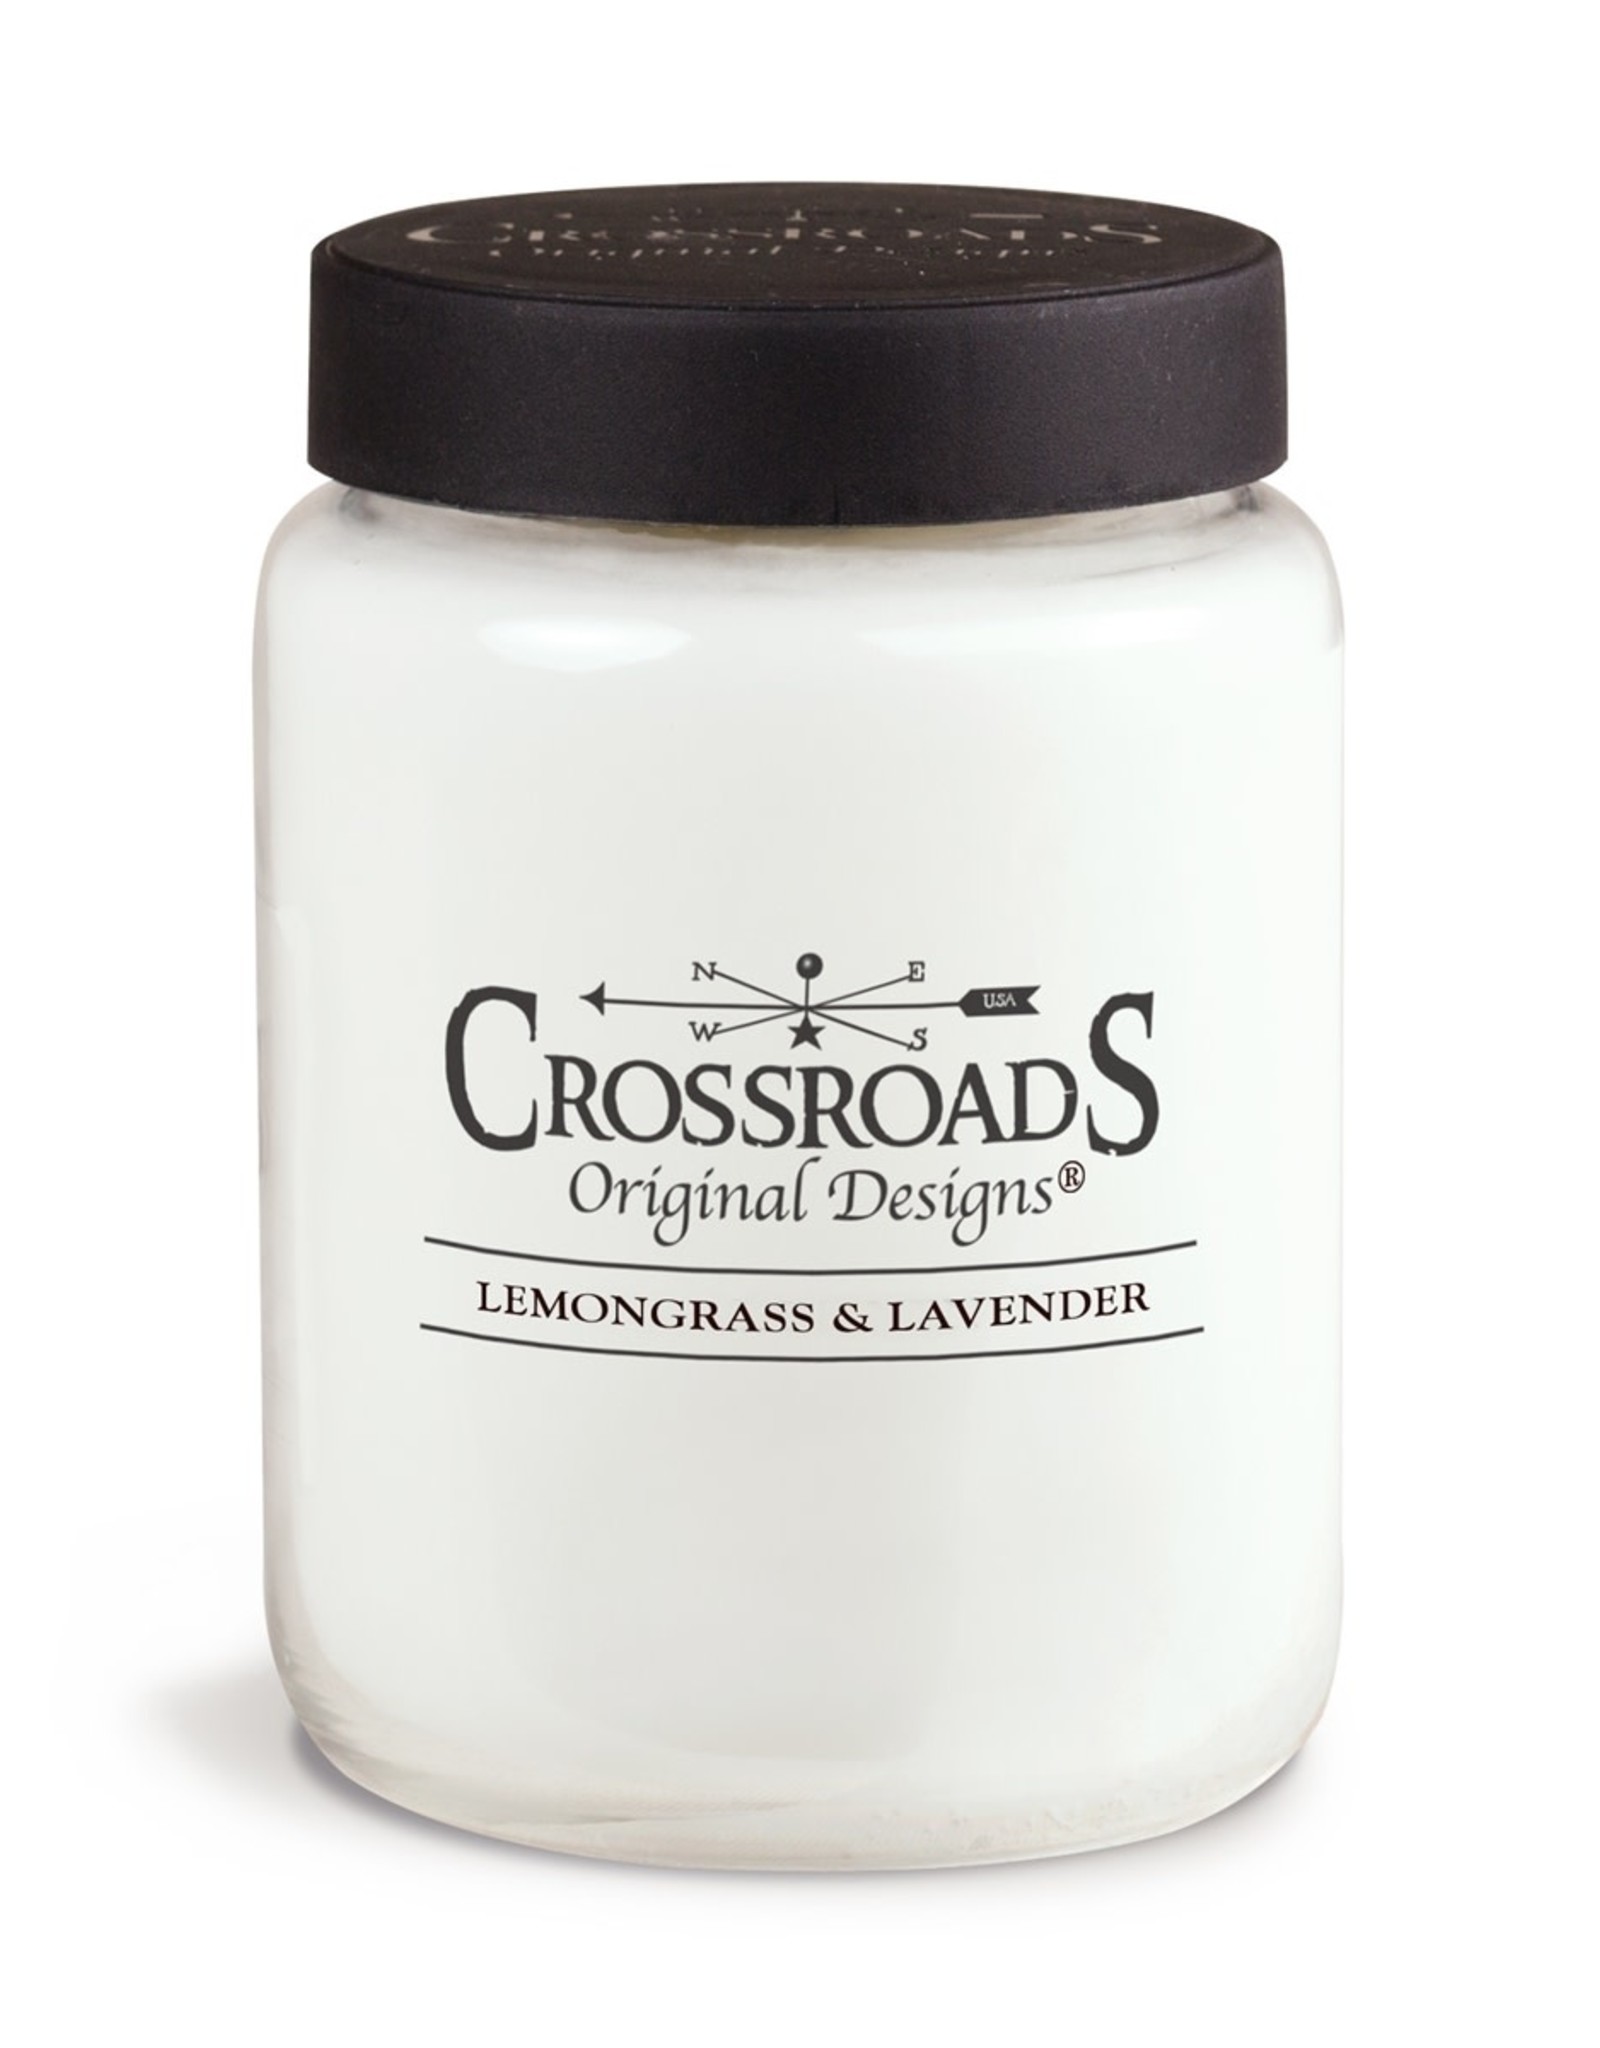 Crossroads Lemongrass & Lavender Candle